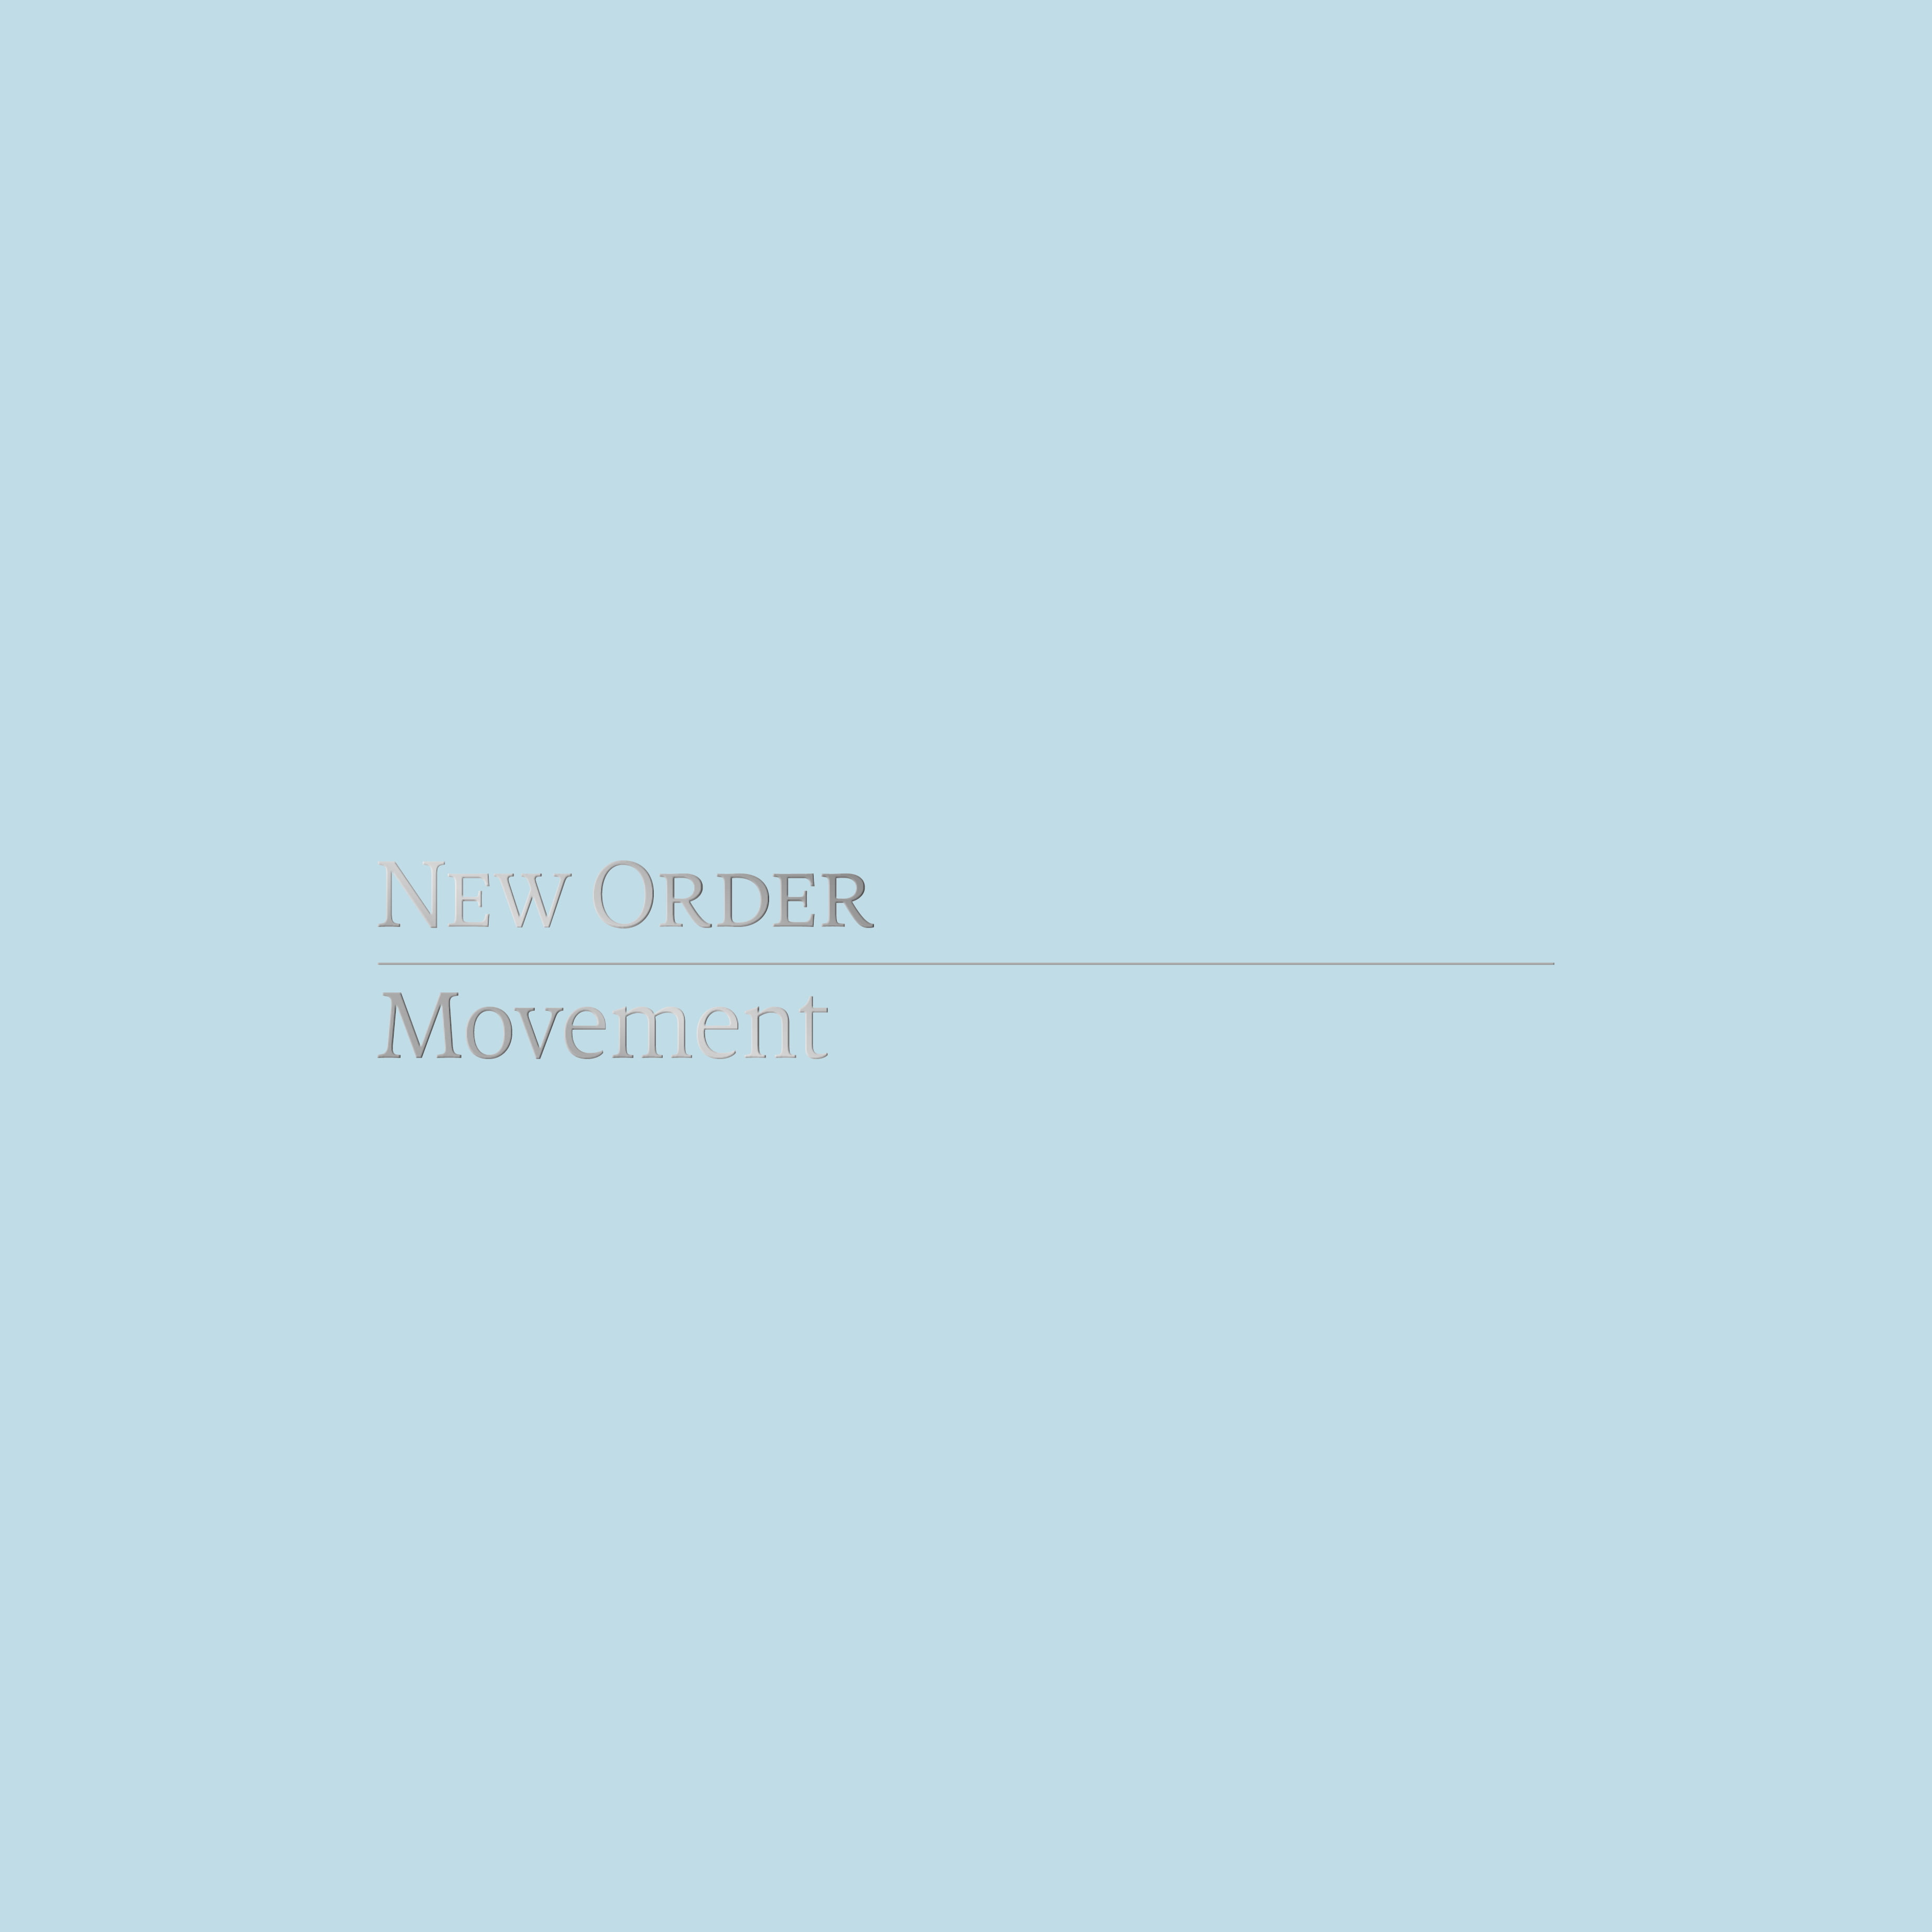 New Order announce Movement box set